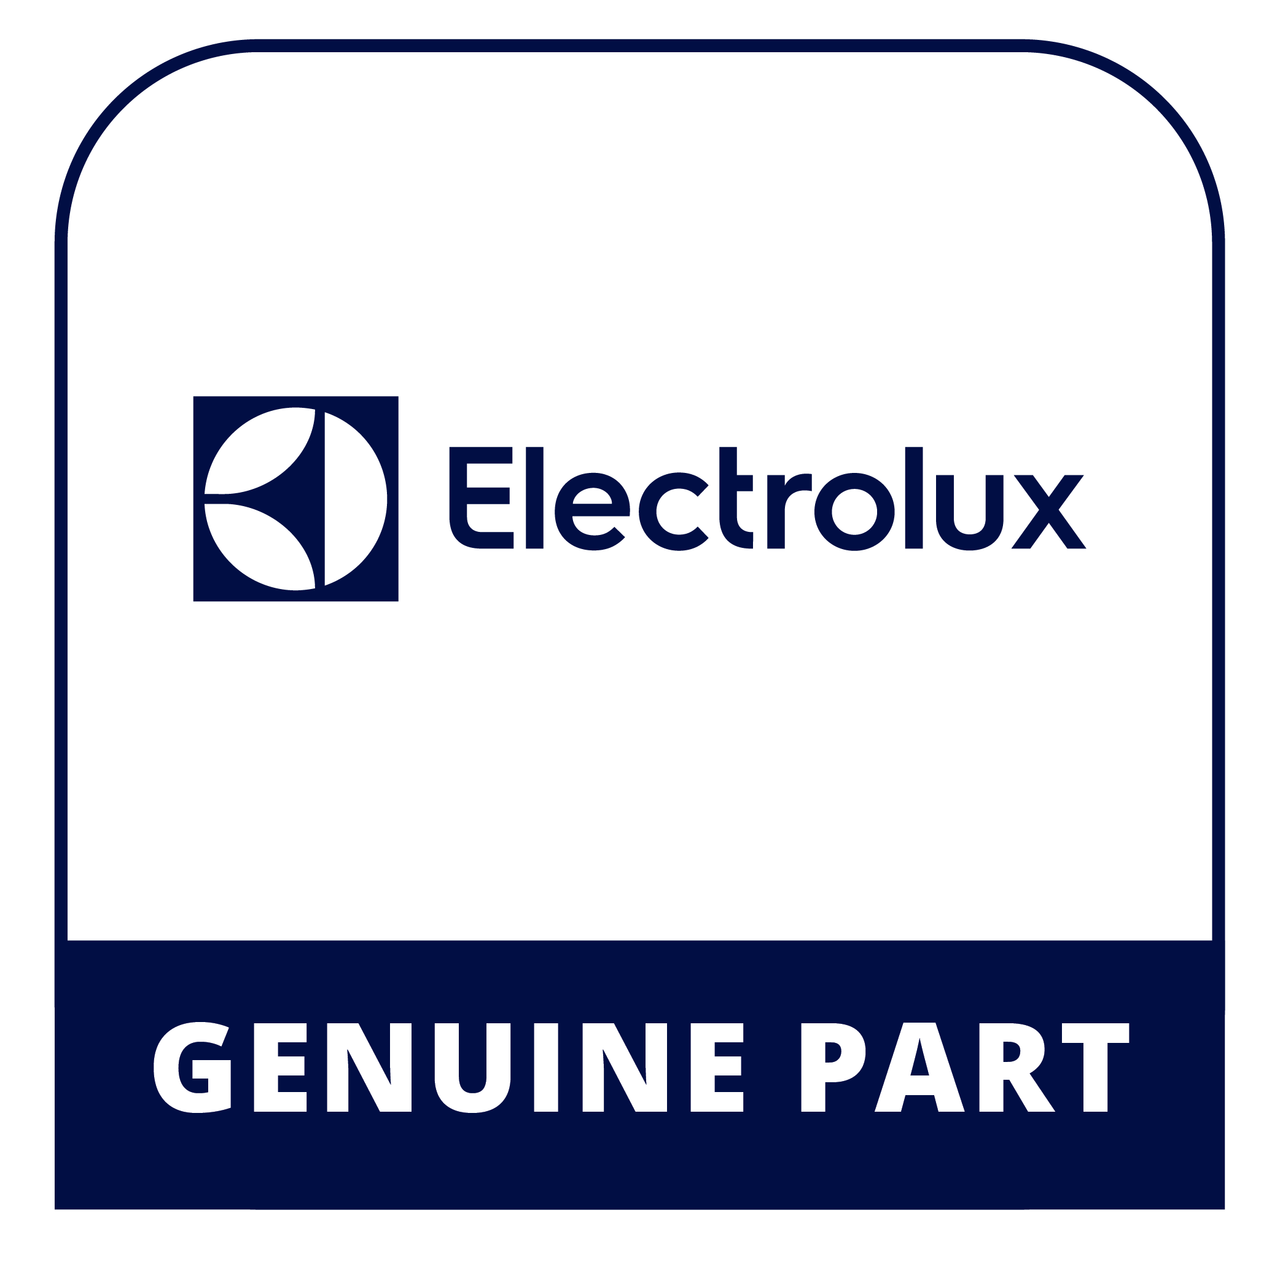 Frigidaire - Electrolux 139028002 Bracket - Genuine Electrolux Part